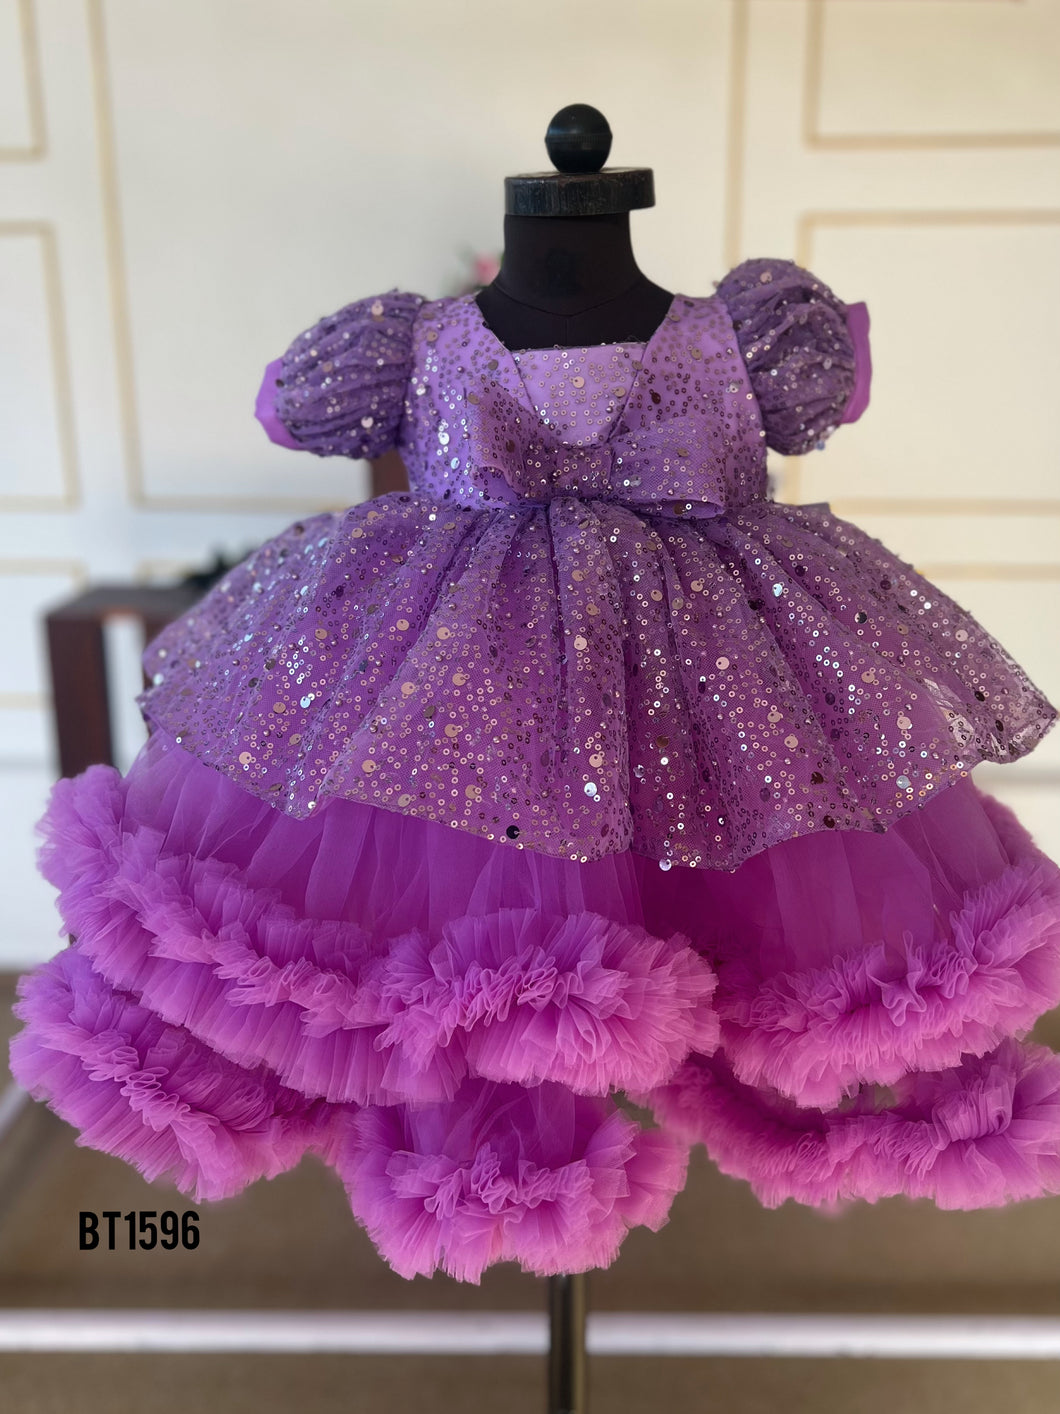 BT1596 Sparkling Princess Party Dress - Purple Glamour for Joyful Celebrations